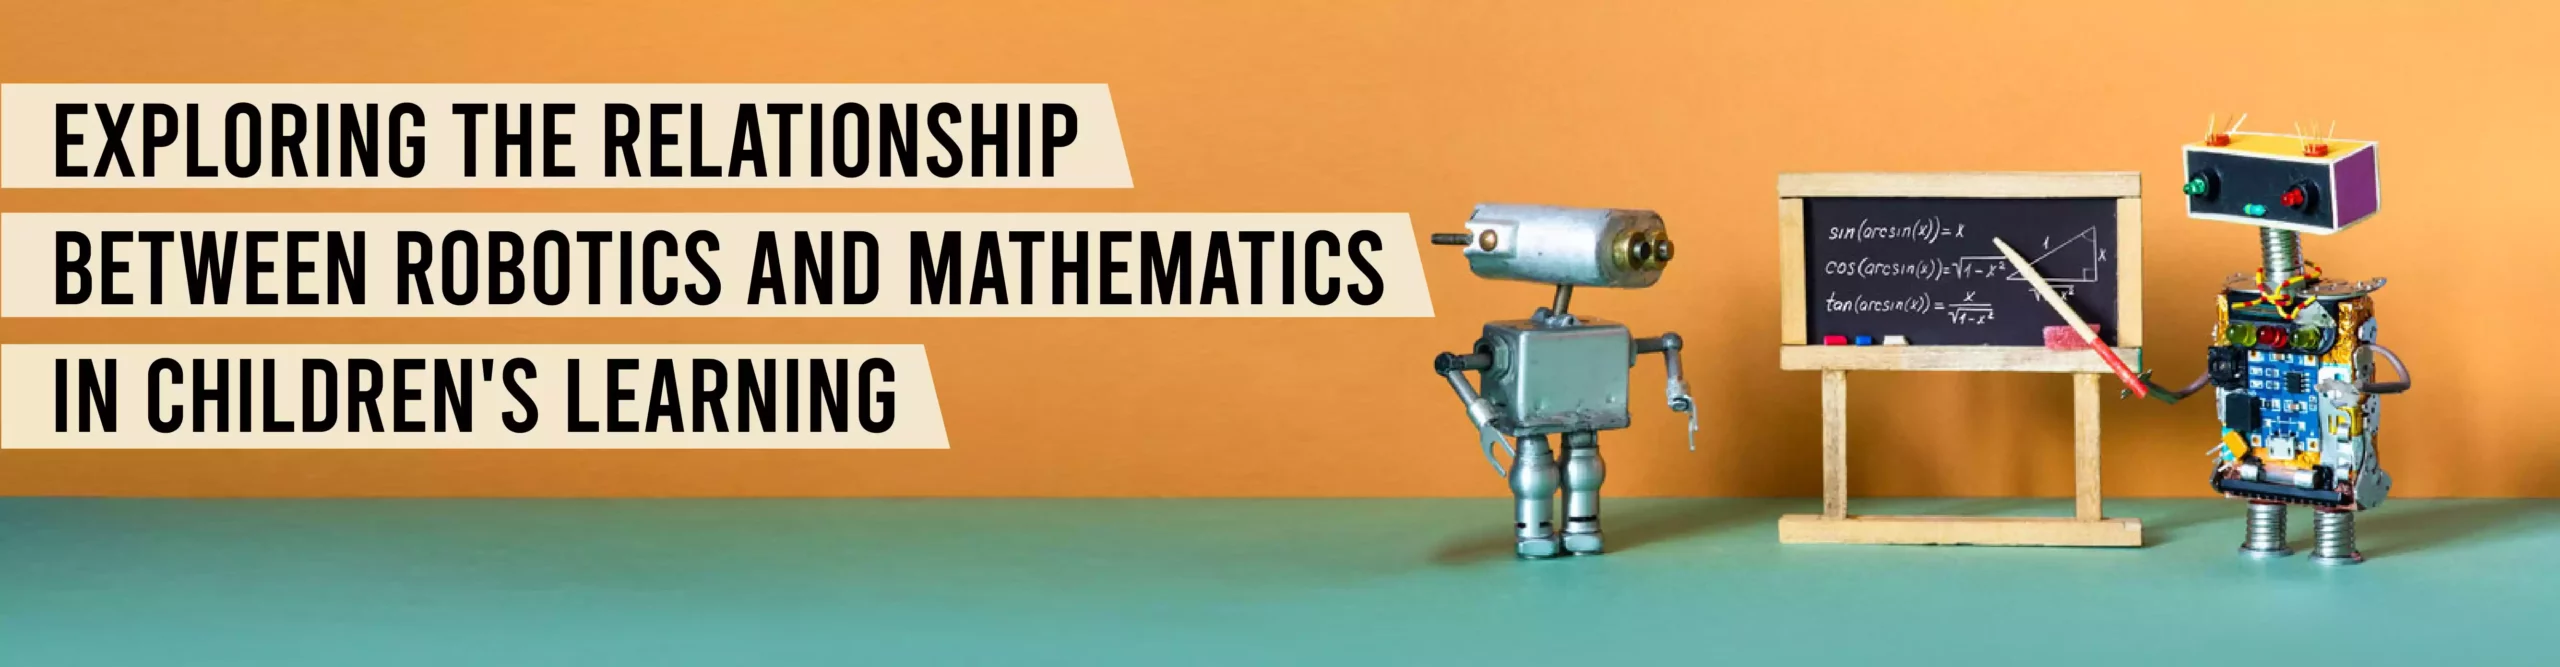 Relationship between Robotics and Mathematics